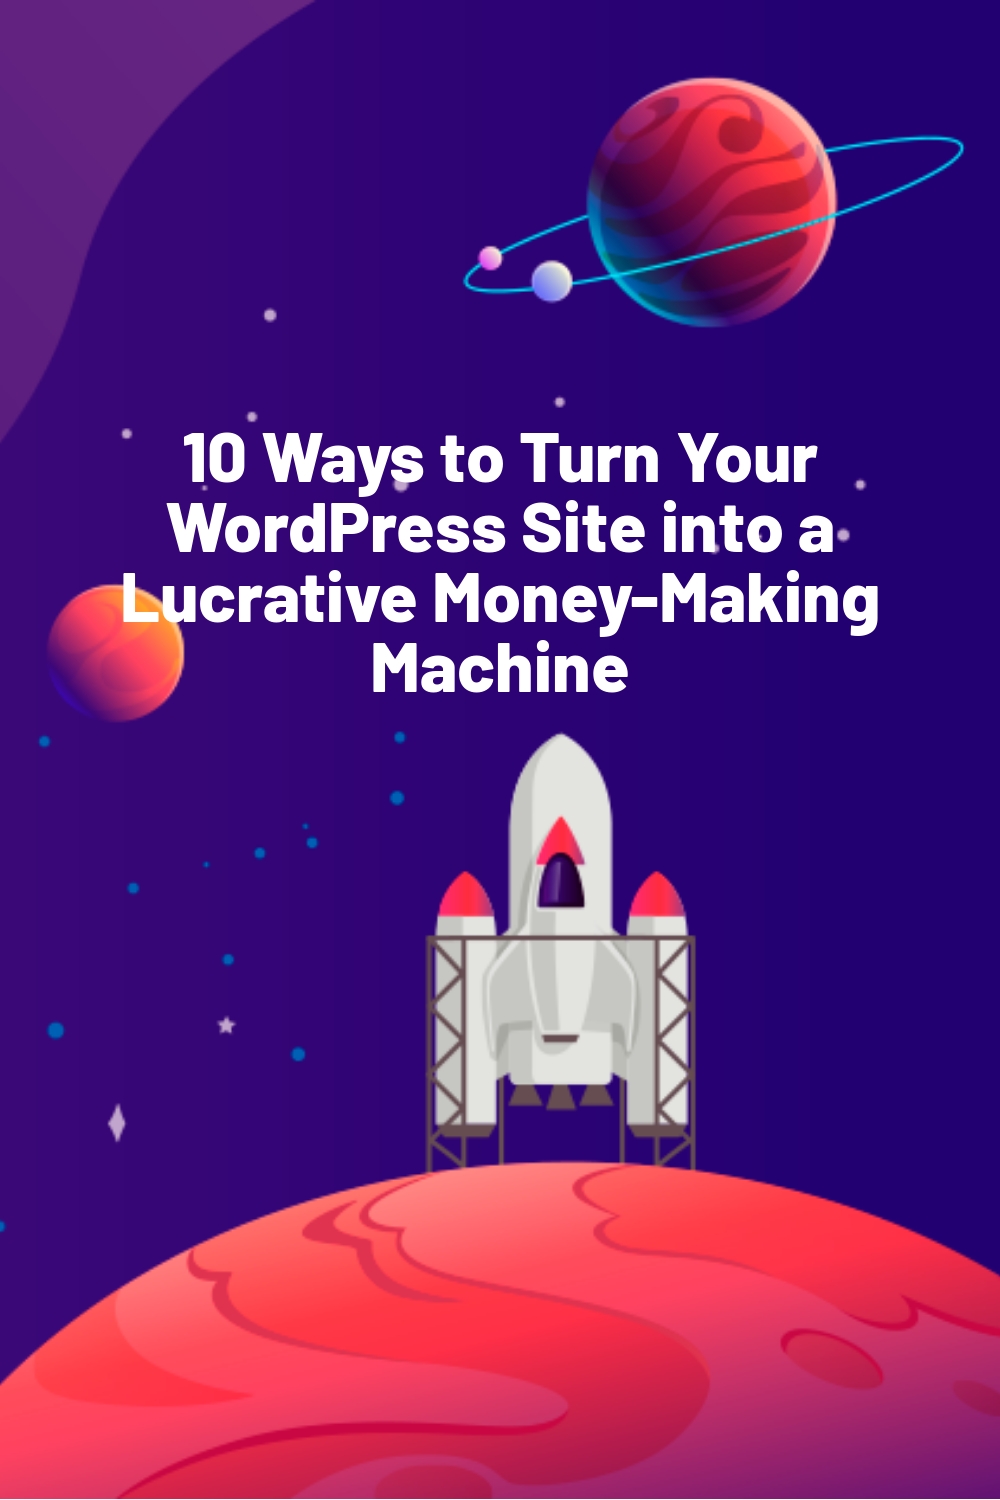 10 Ways to Turn Your WordPress Site into a Lucrative Money-Making Machine